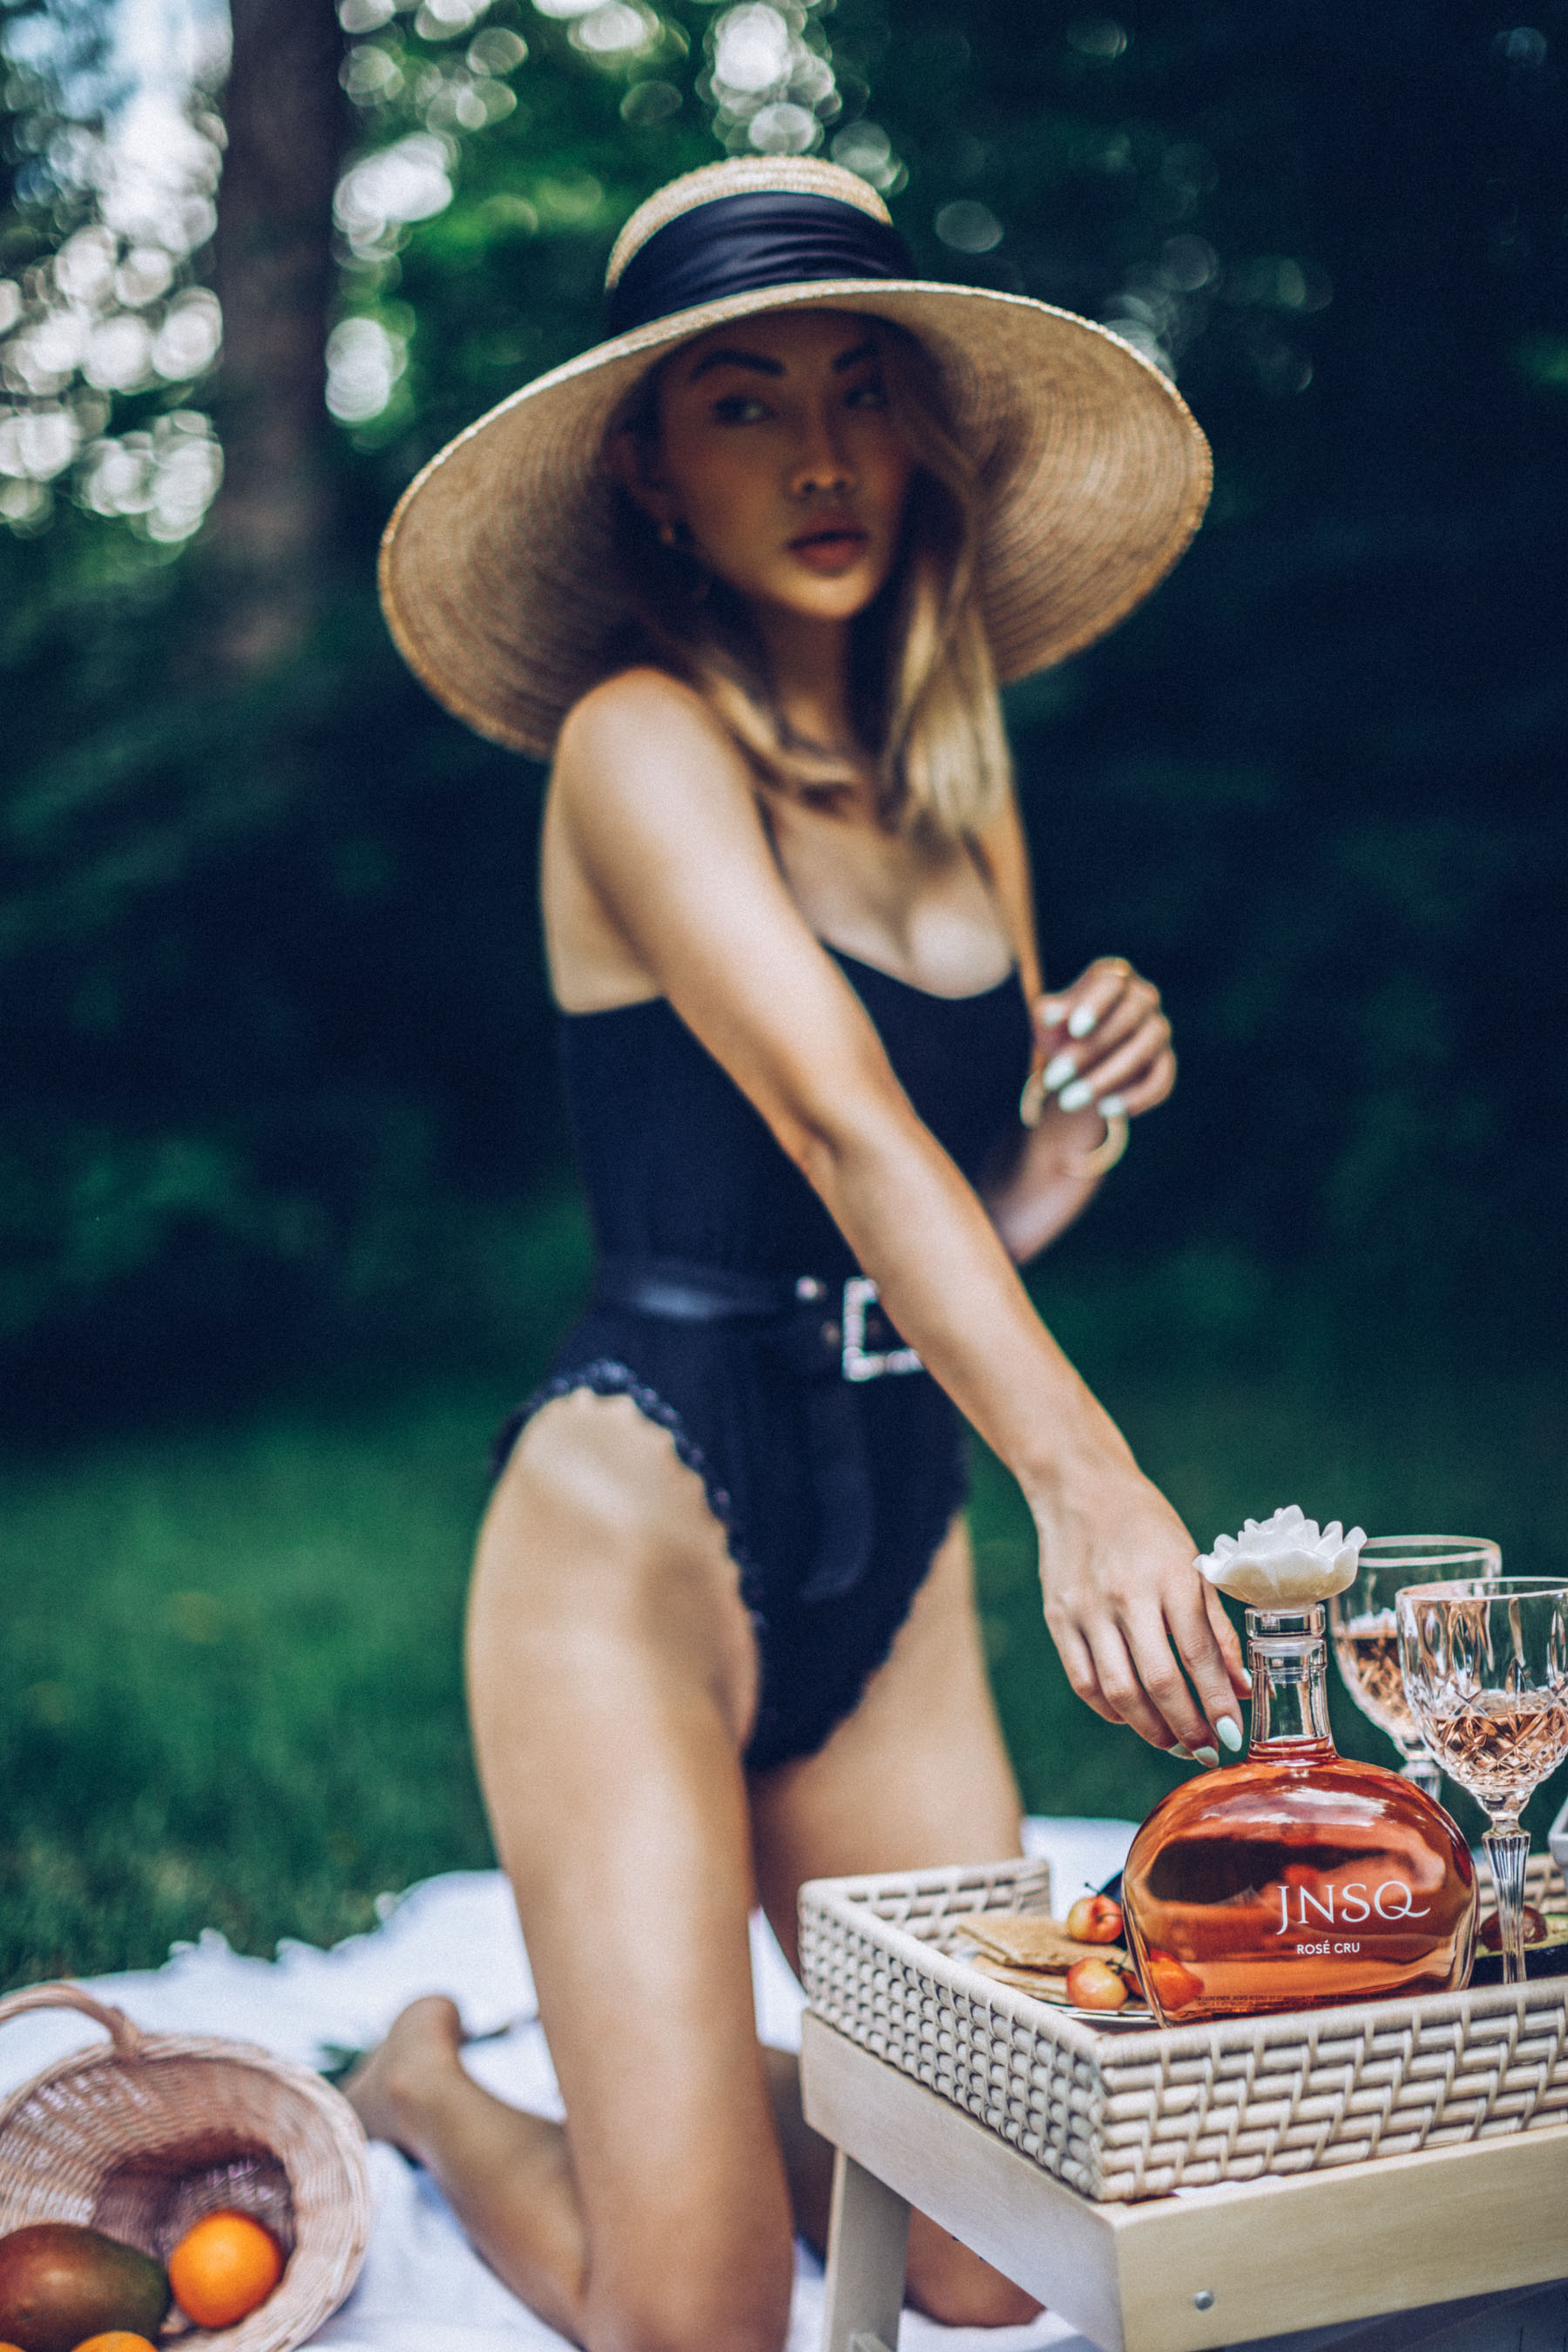 fashion girl's guide to entertaining, jnsq wines, jnsq rose wine, summer rose, black belted bikini, wide brim hat // Notjessfashion.com